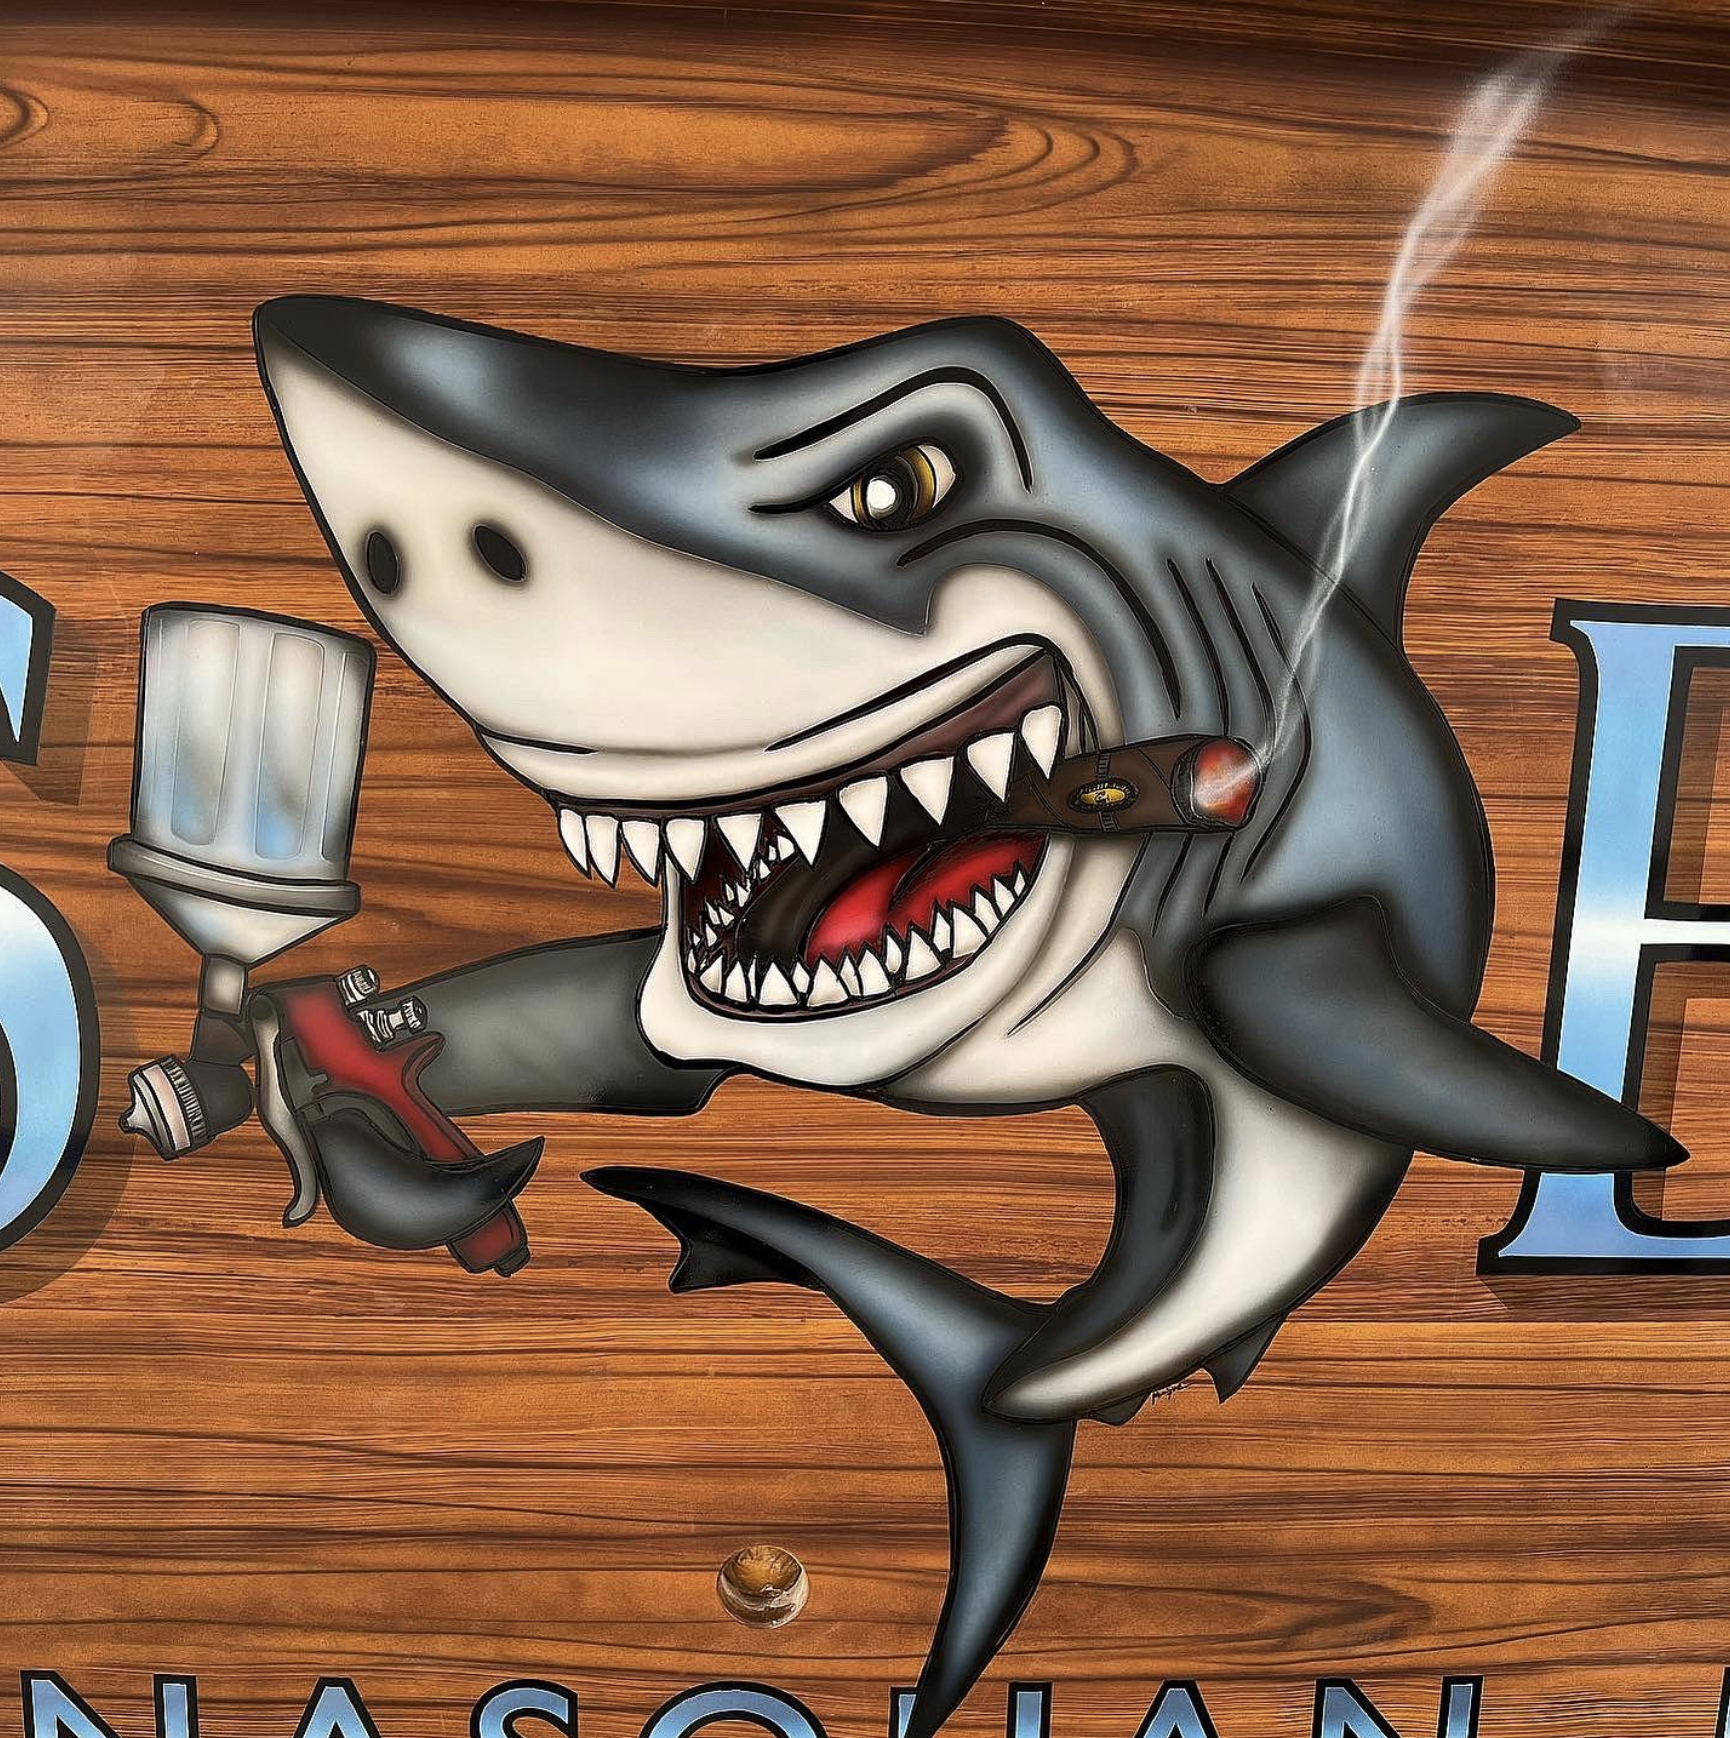 shark smoking cigar boat artwork by monique richter